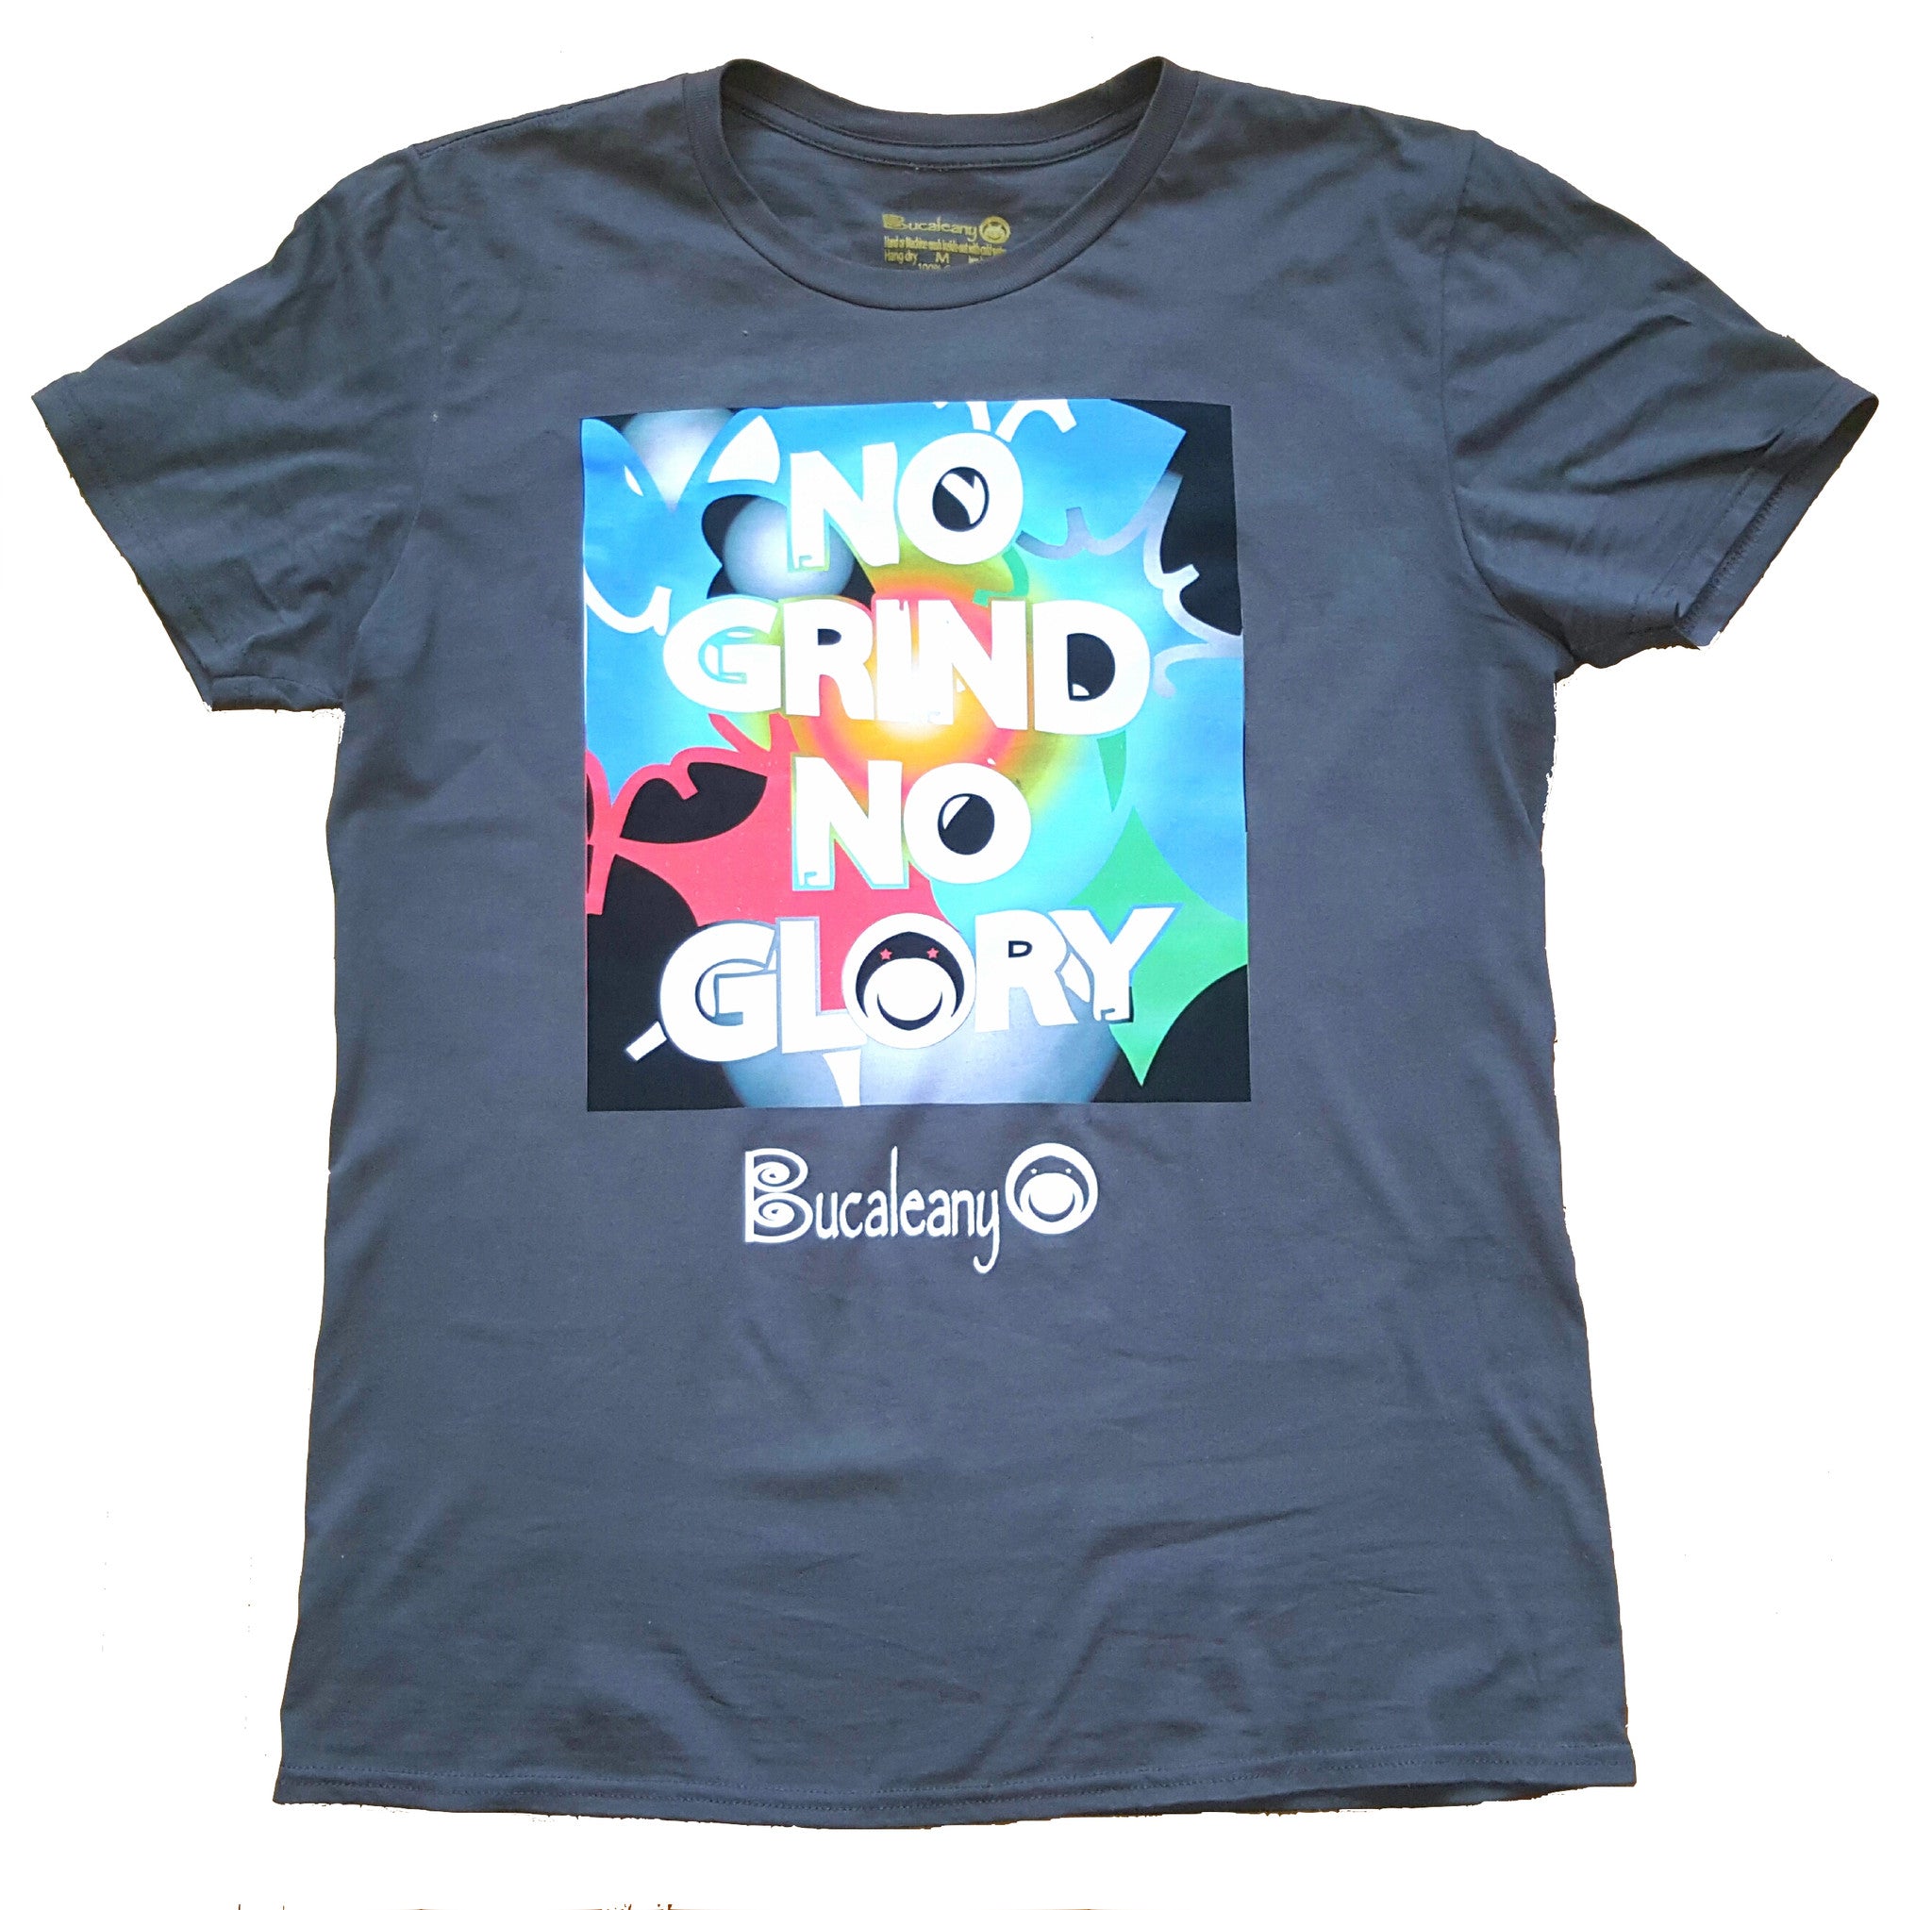 Bucaleany "No Grind No Glory" T-shirt.